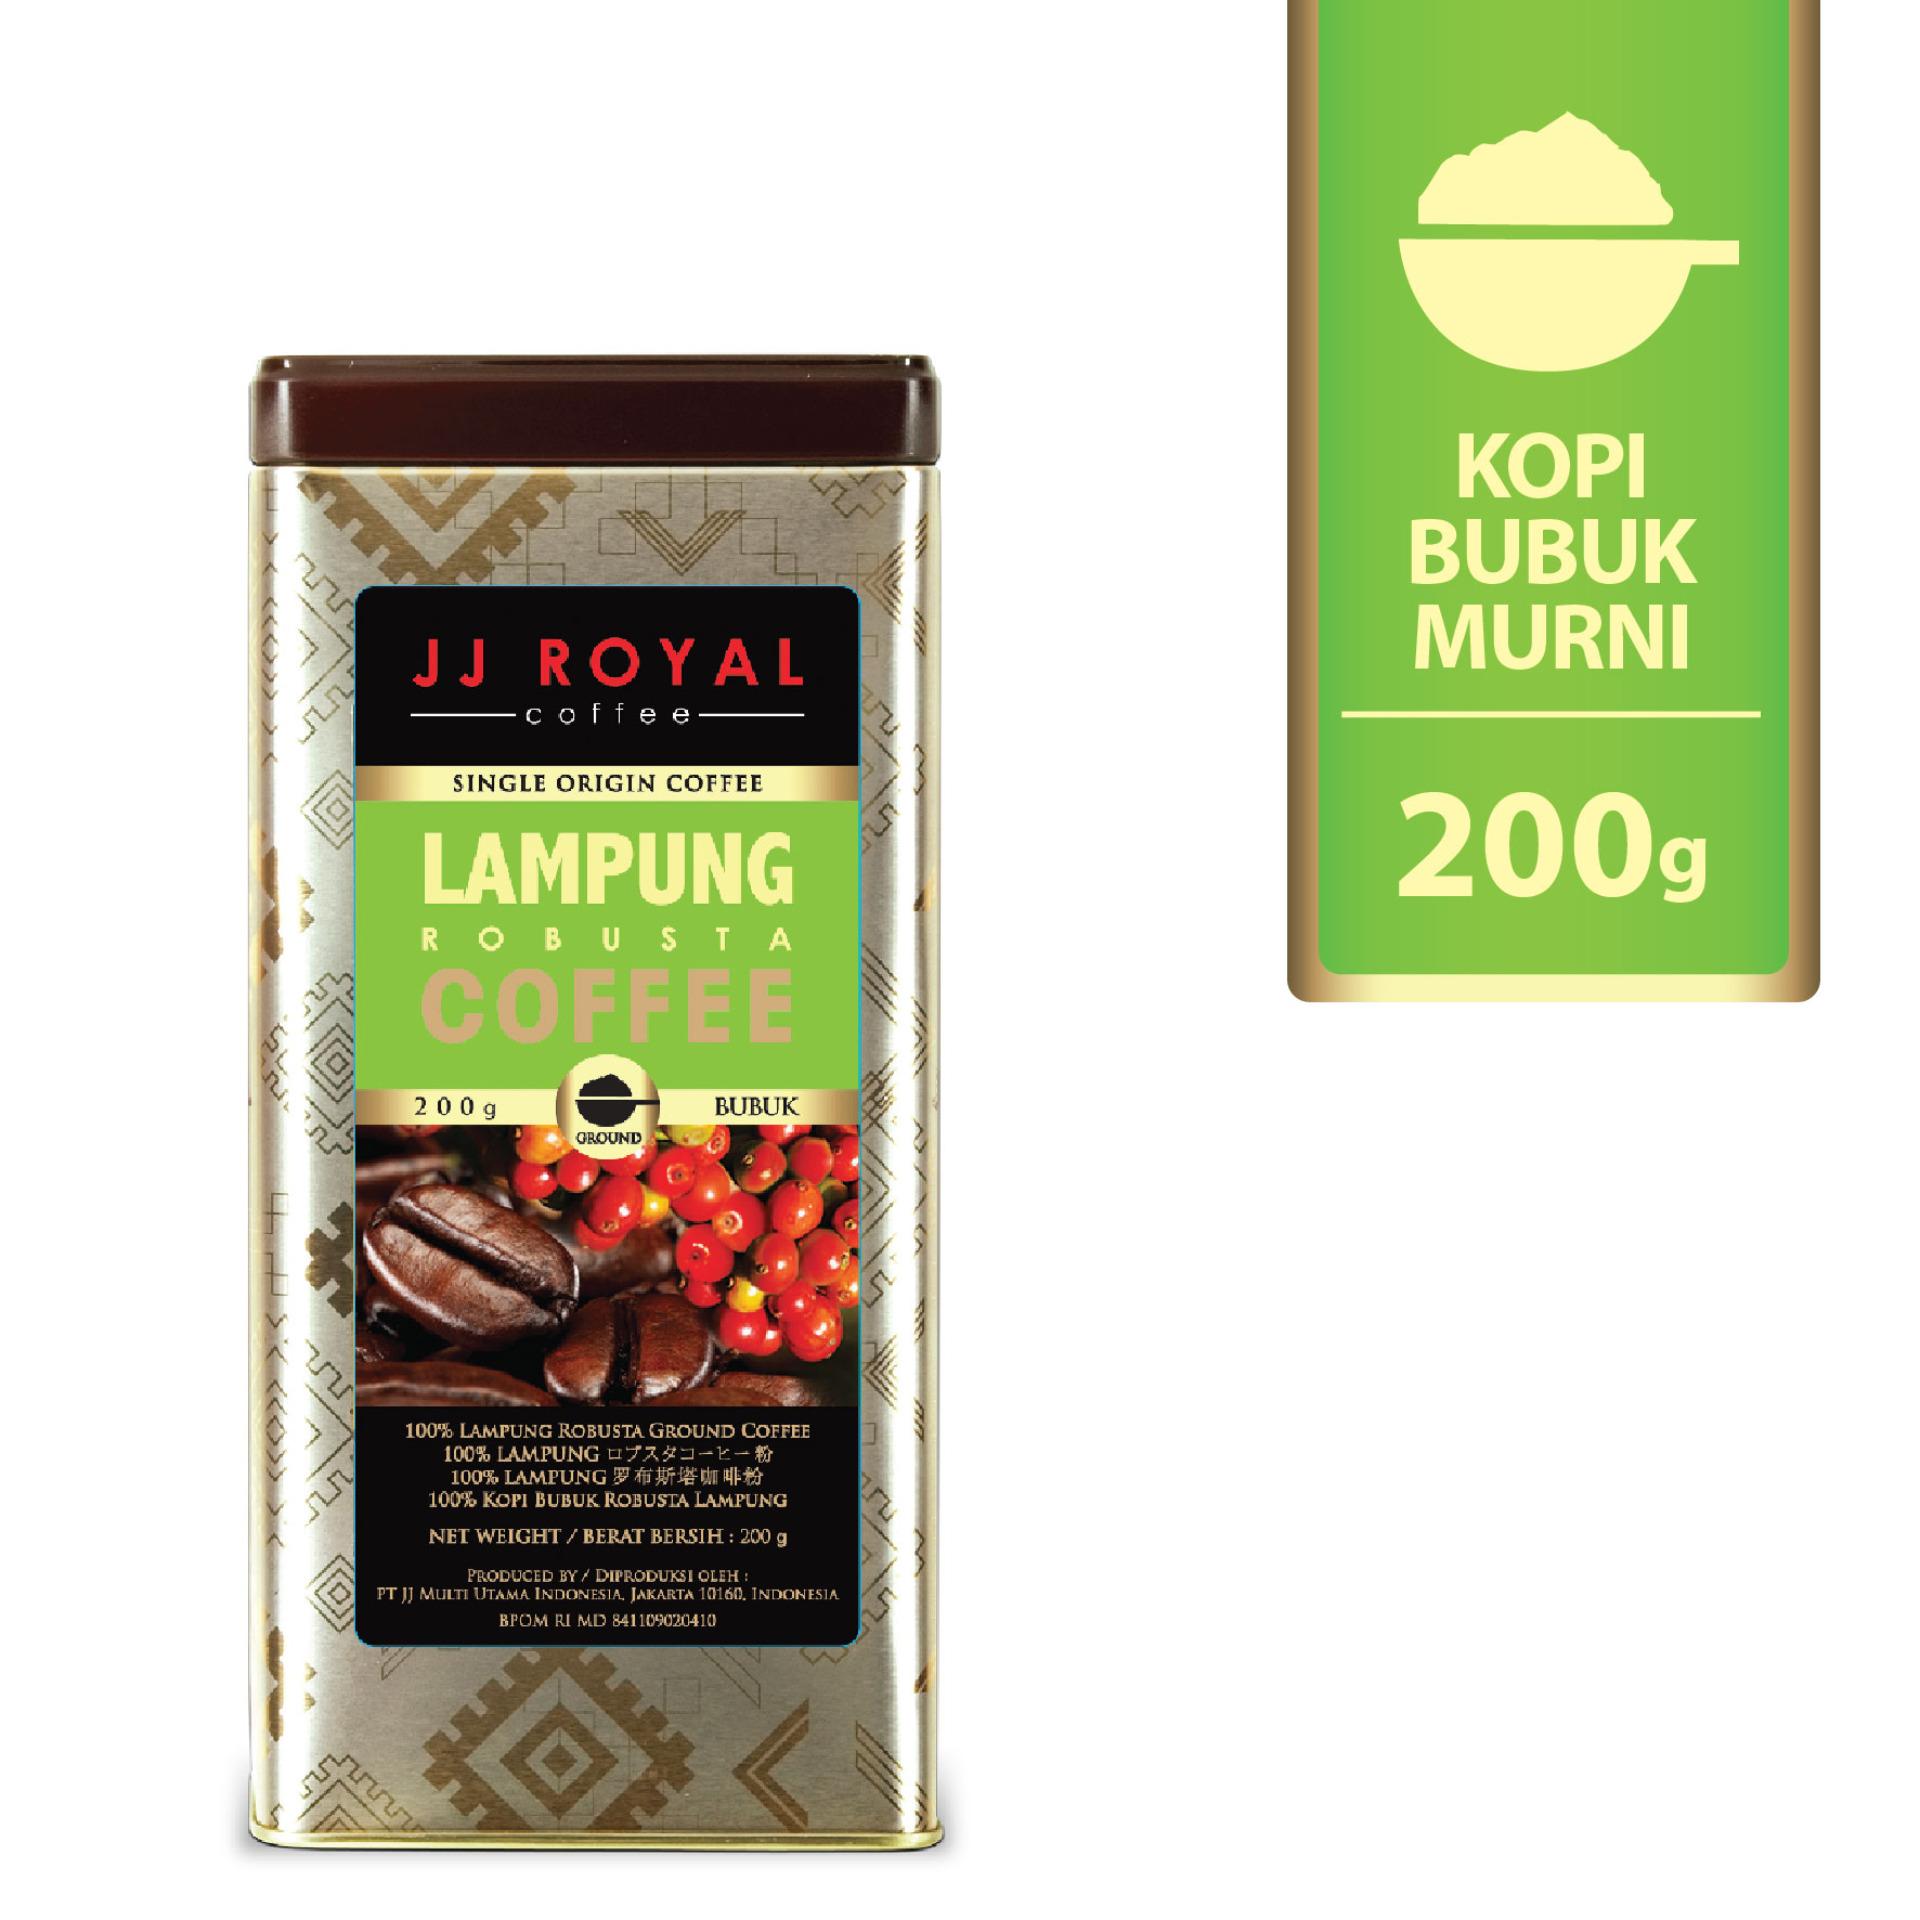 Murah Hanya JJ Royal Coffee Lampung Robusta Ground (Kopi Bubuk) Tin
200gr